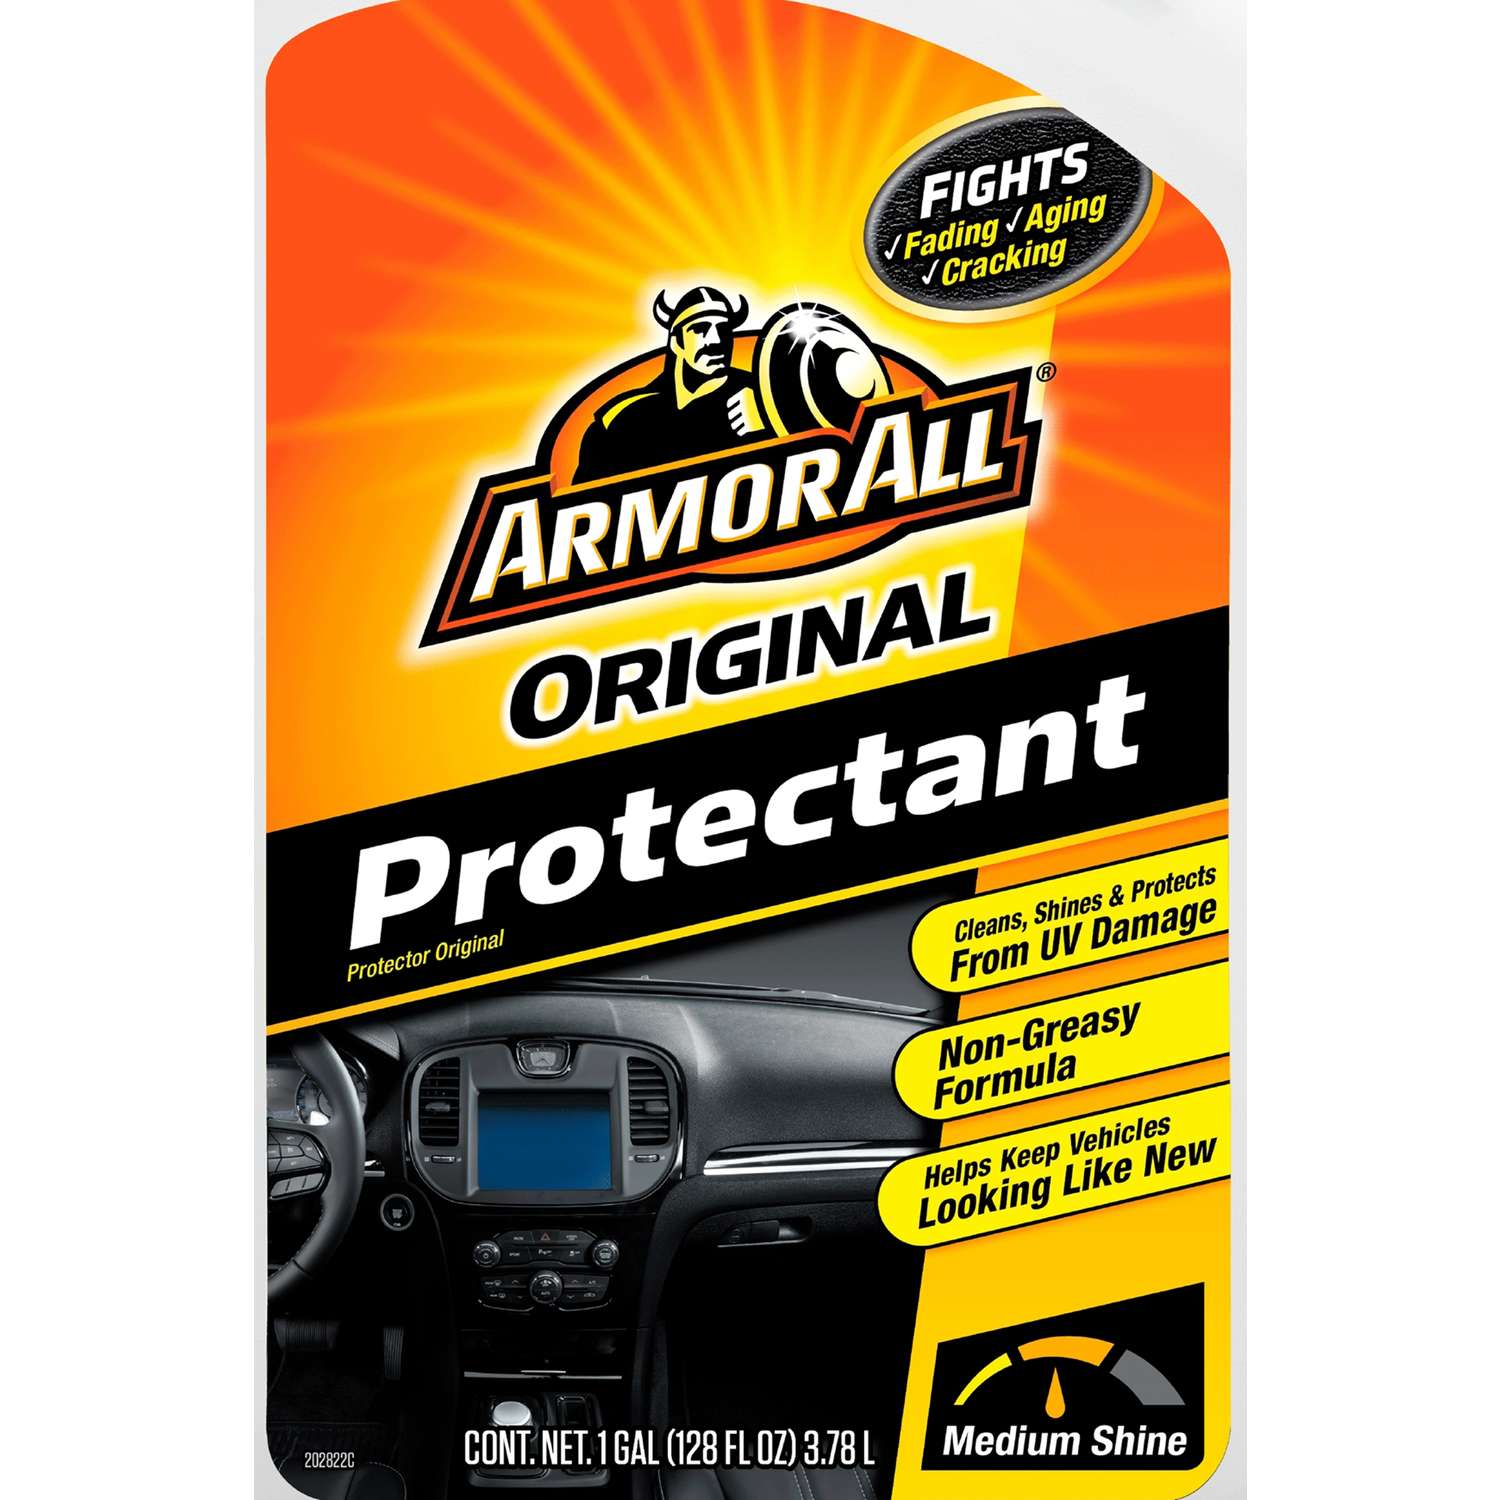 NEW Armor All Car Essentials Kit 3pc Bundle Essential Emergency Tools